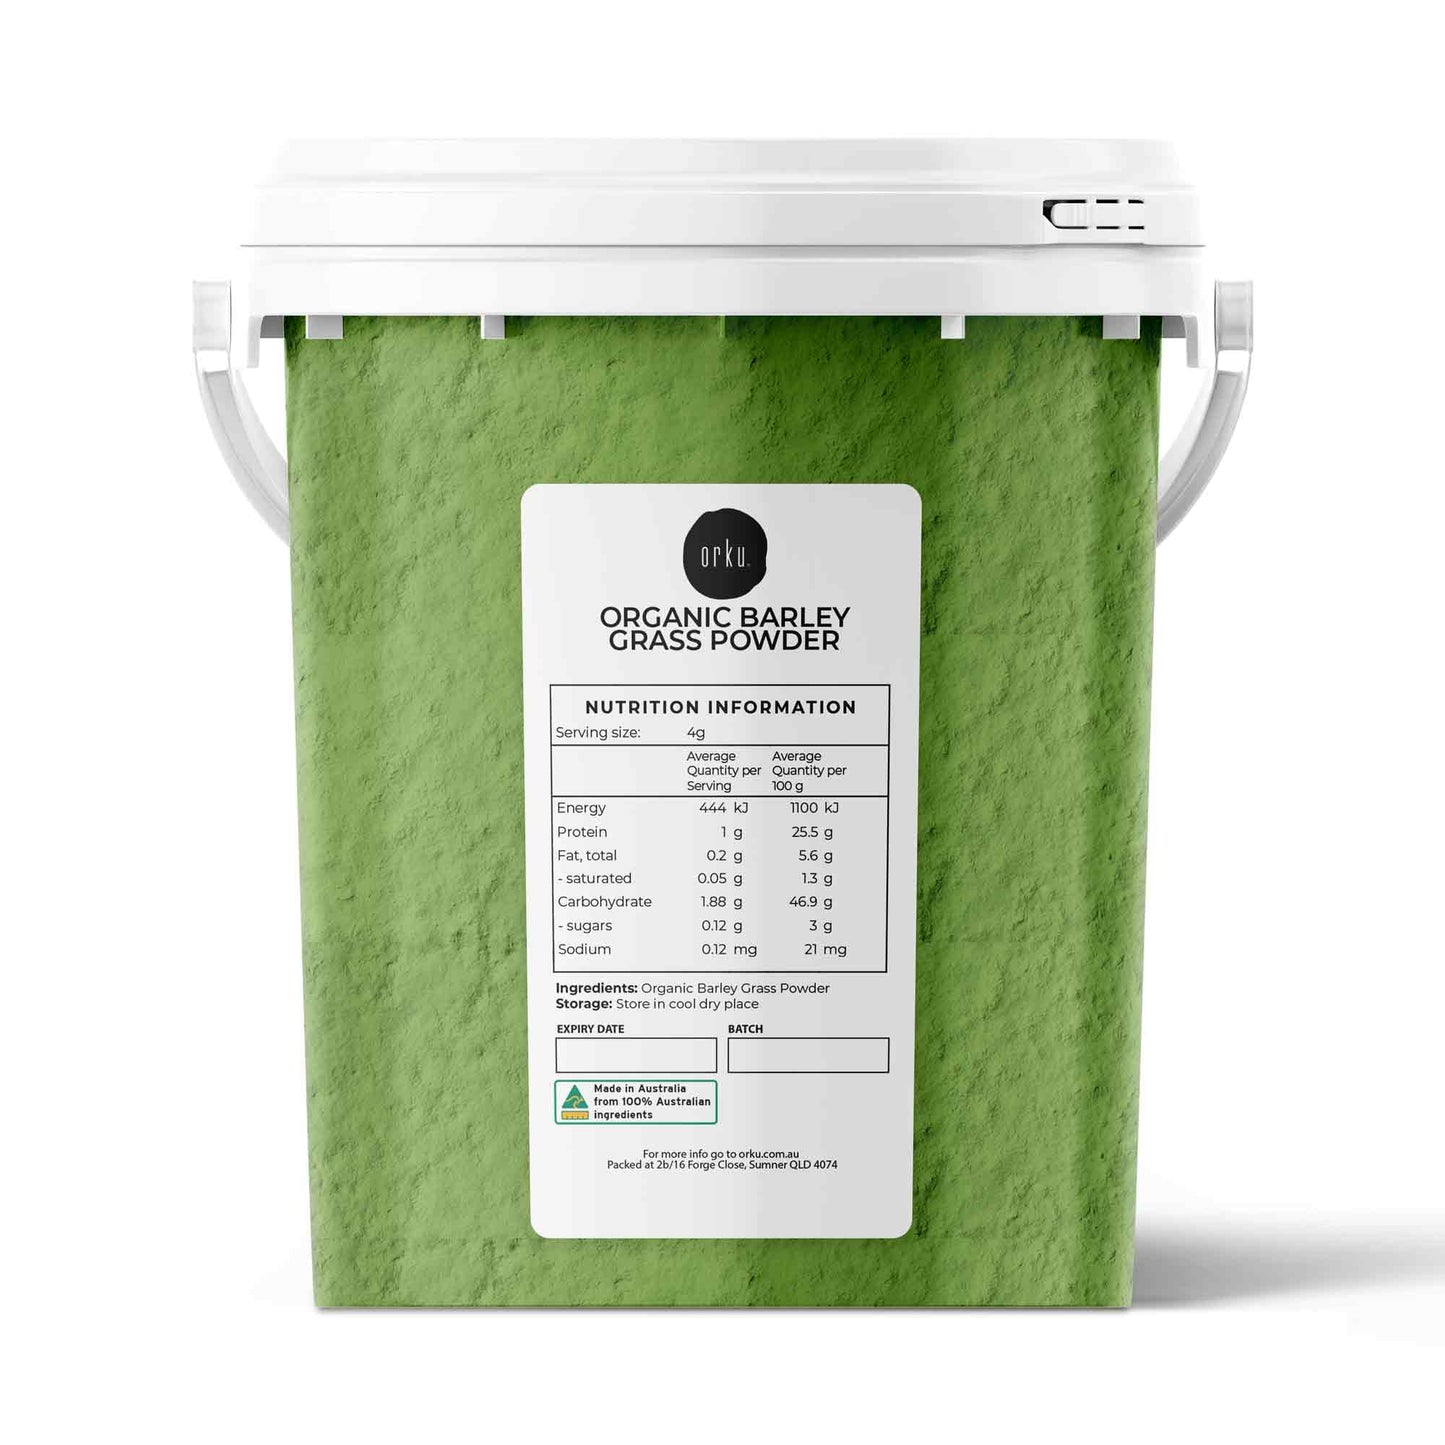 Organic Barley Grass Powder Buckets Hordeum Vulgare Leaf Superfood Supplement